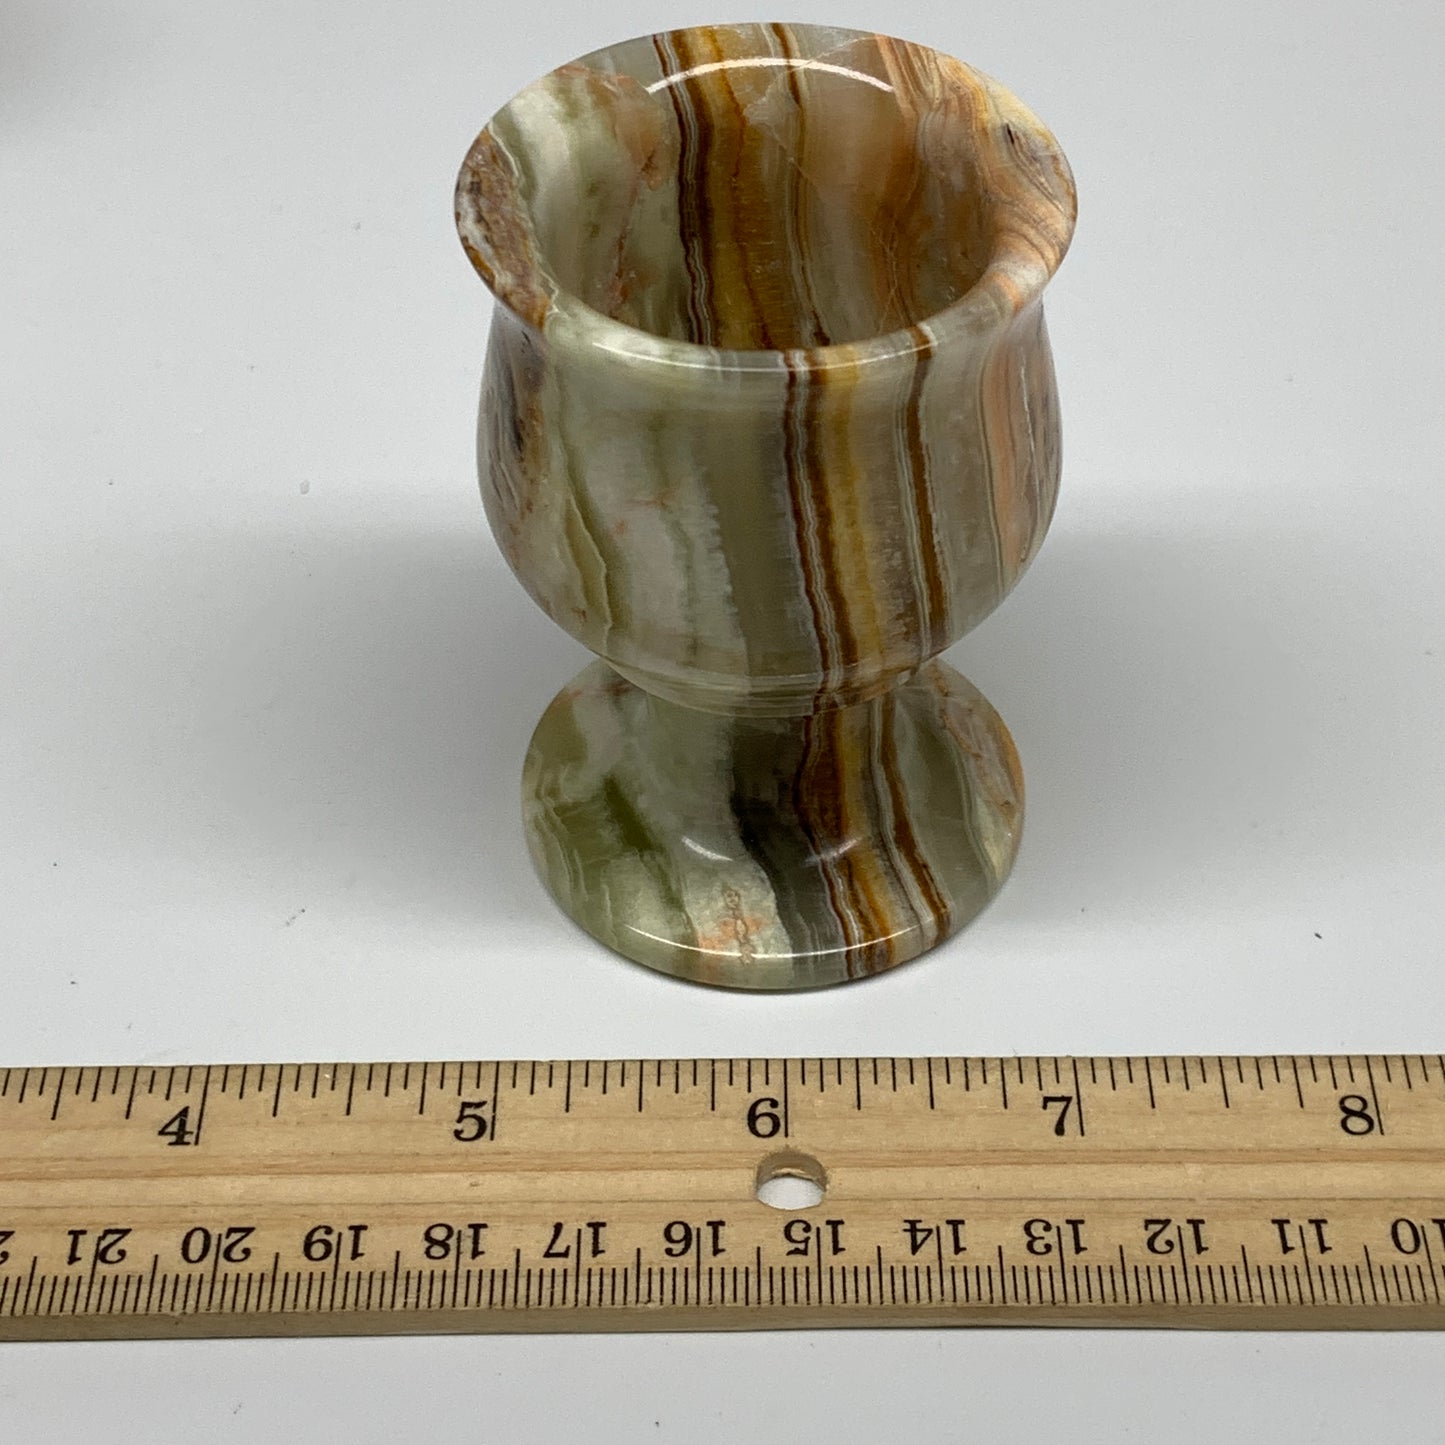 6pcs set, 2.8" x 2" Green Onyx cups wholesale